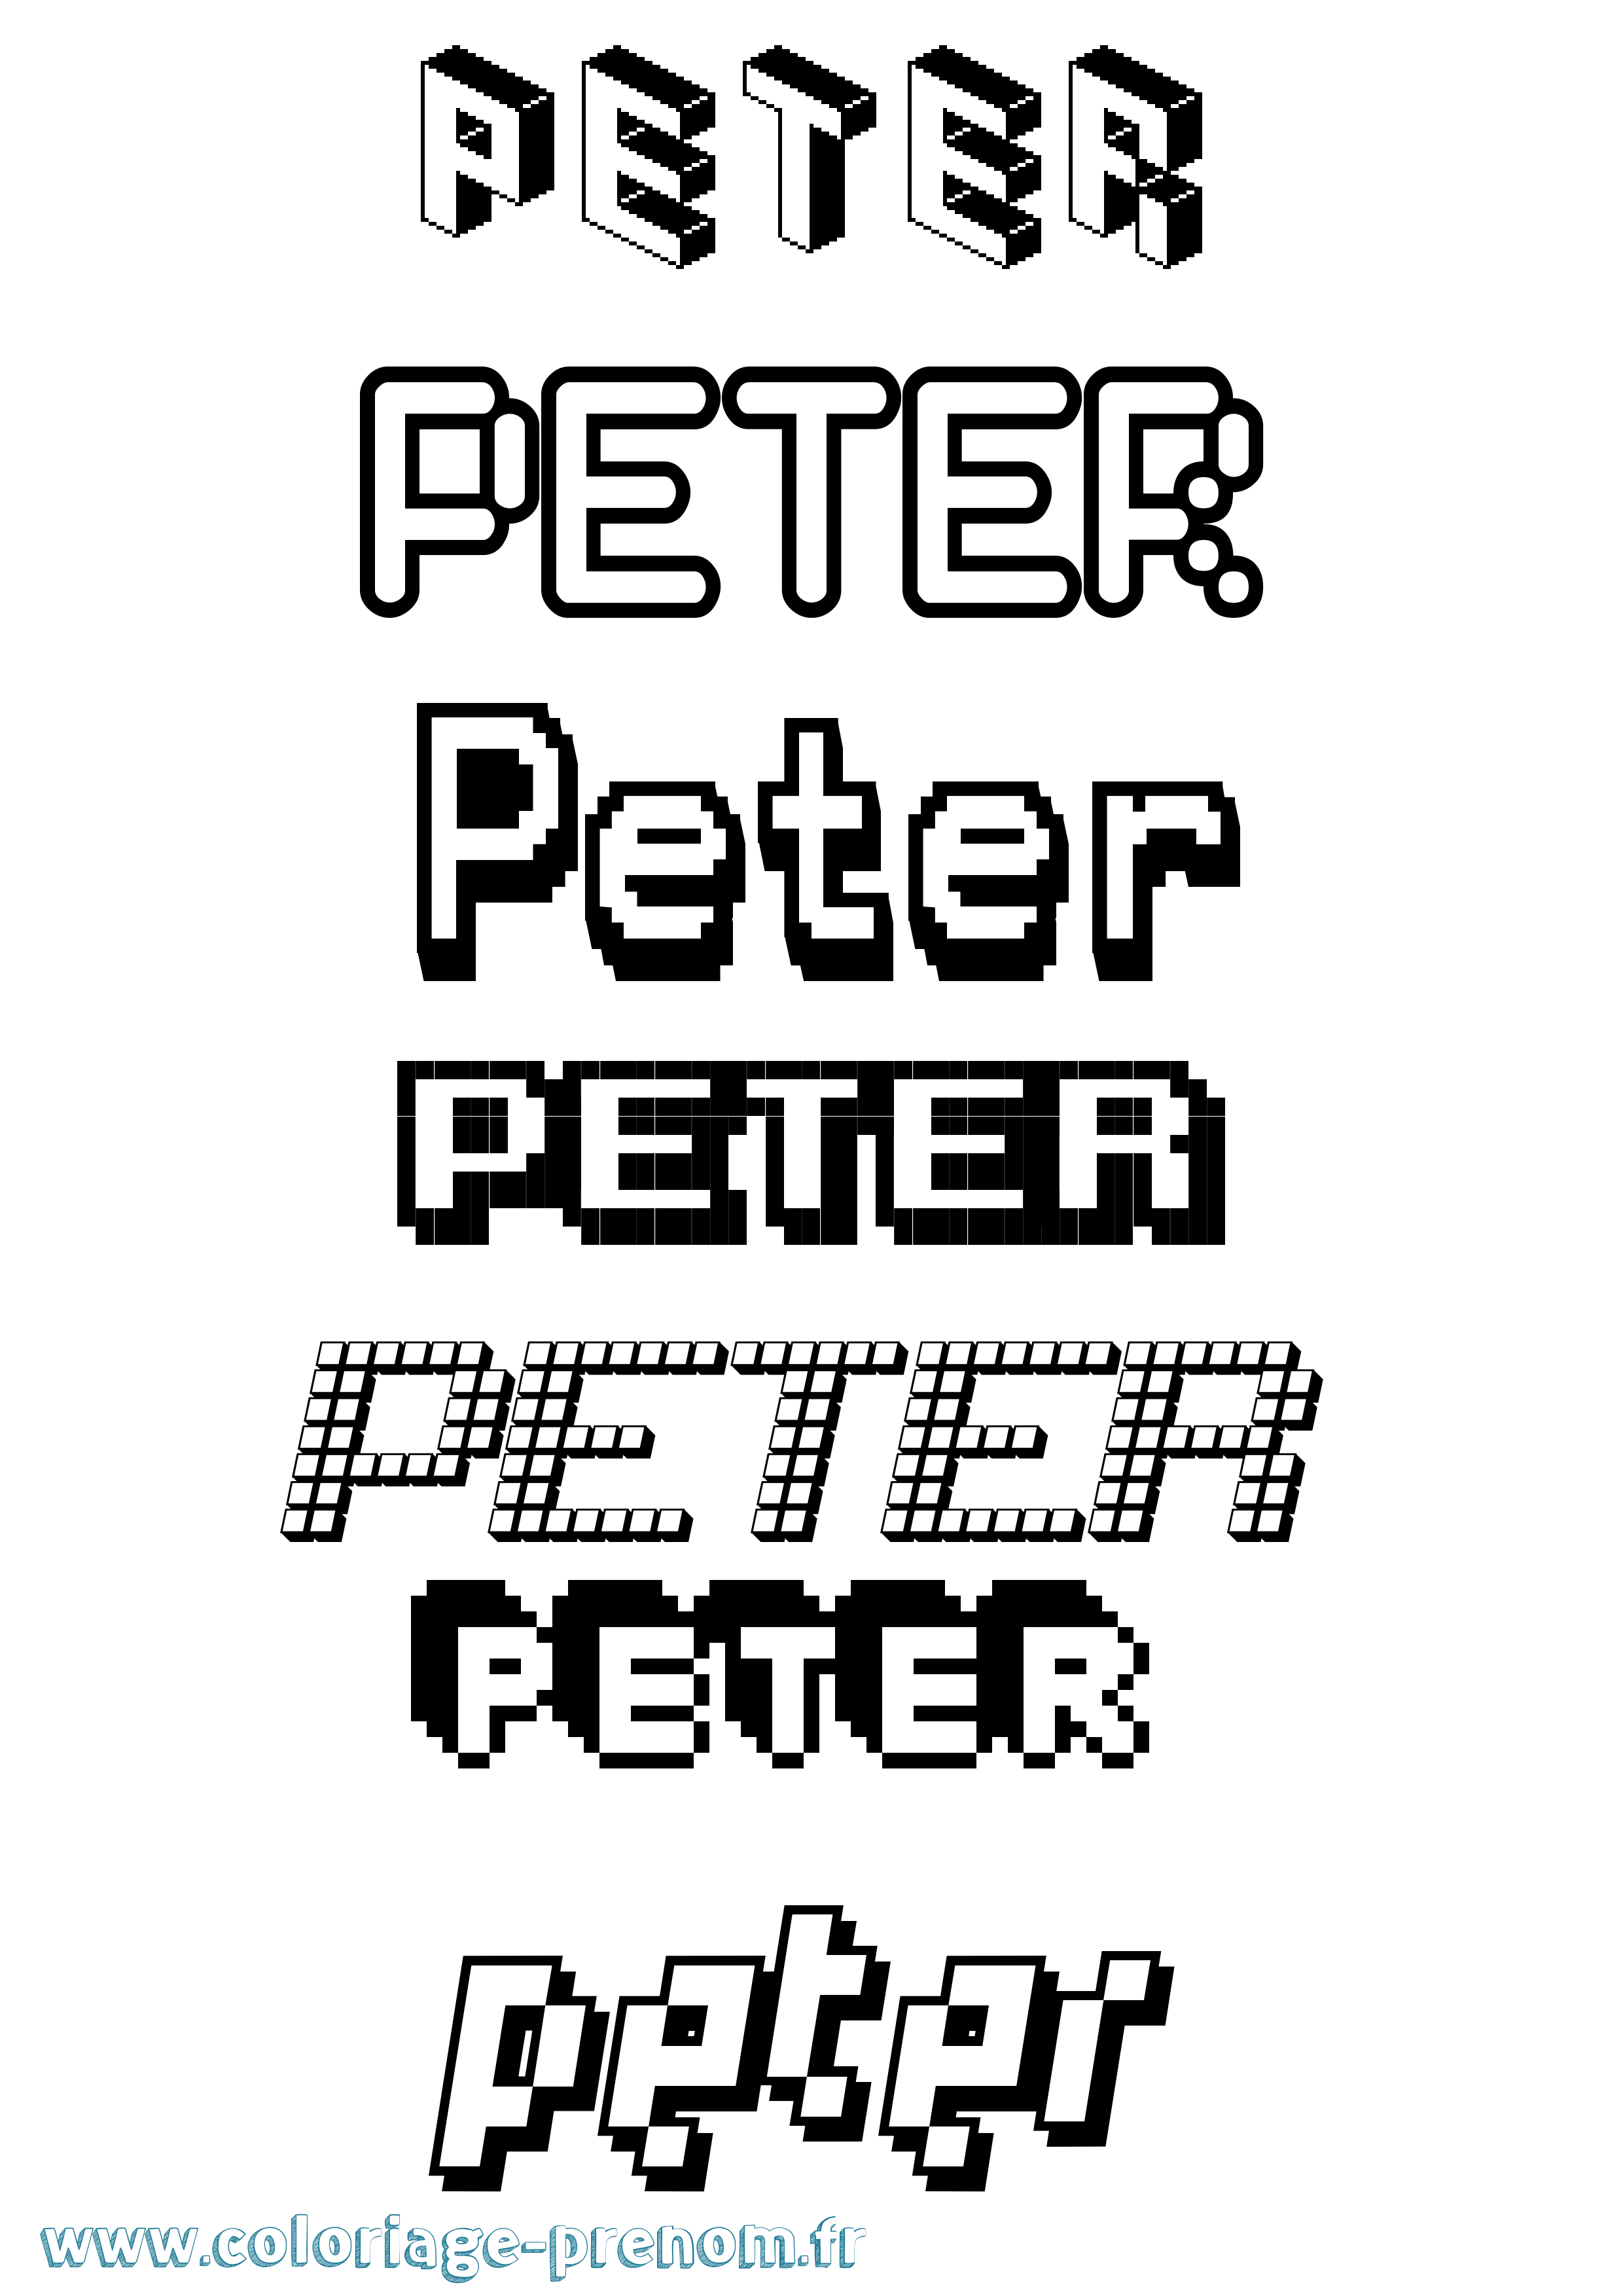 Coloriage prénom Peter Pixel